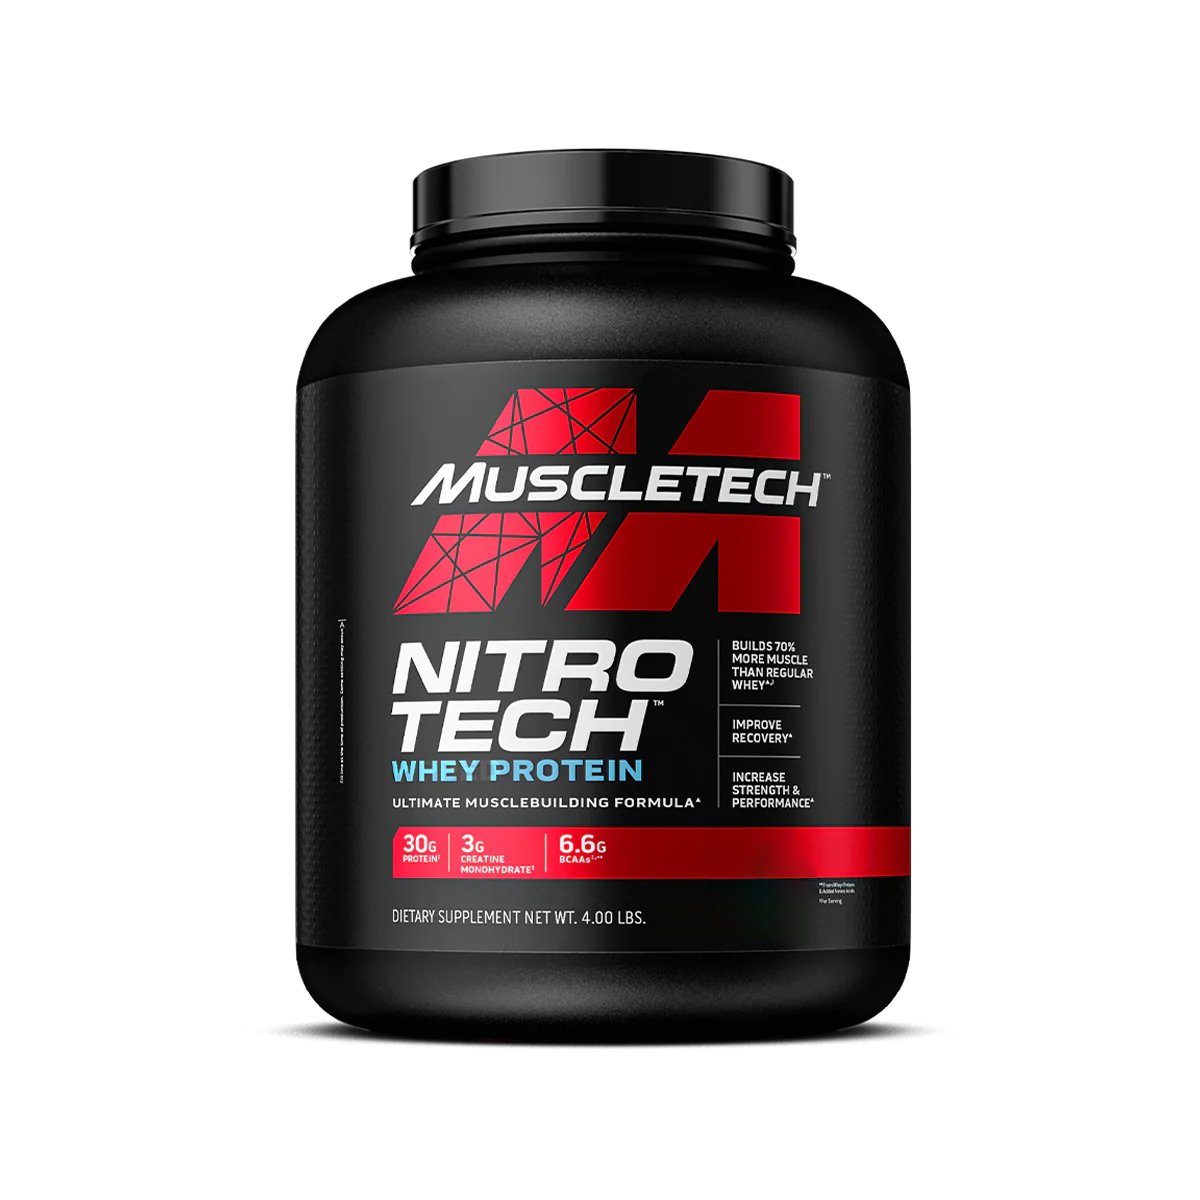 Протеин Muscletech Nitro Tech Whey Protein, 1.81 кг Печенье-крем,  мл, MuscleTech. Протеин. Набор массы Восстановление Антикатаболические свойства 